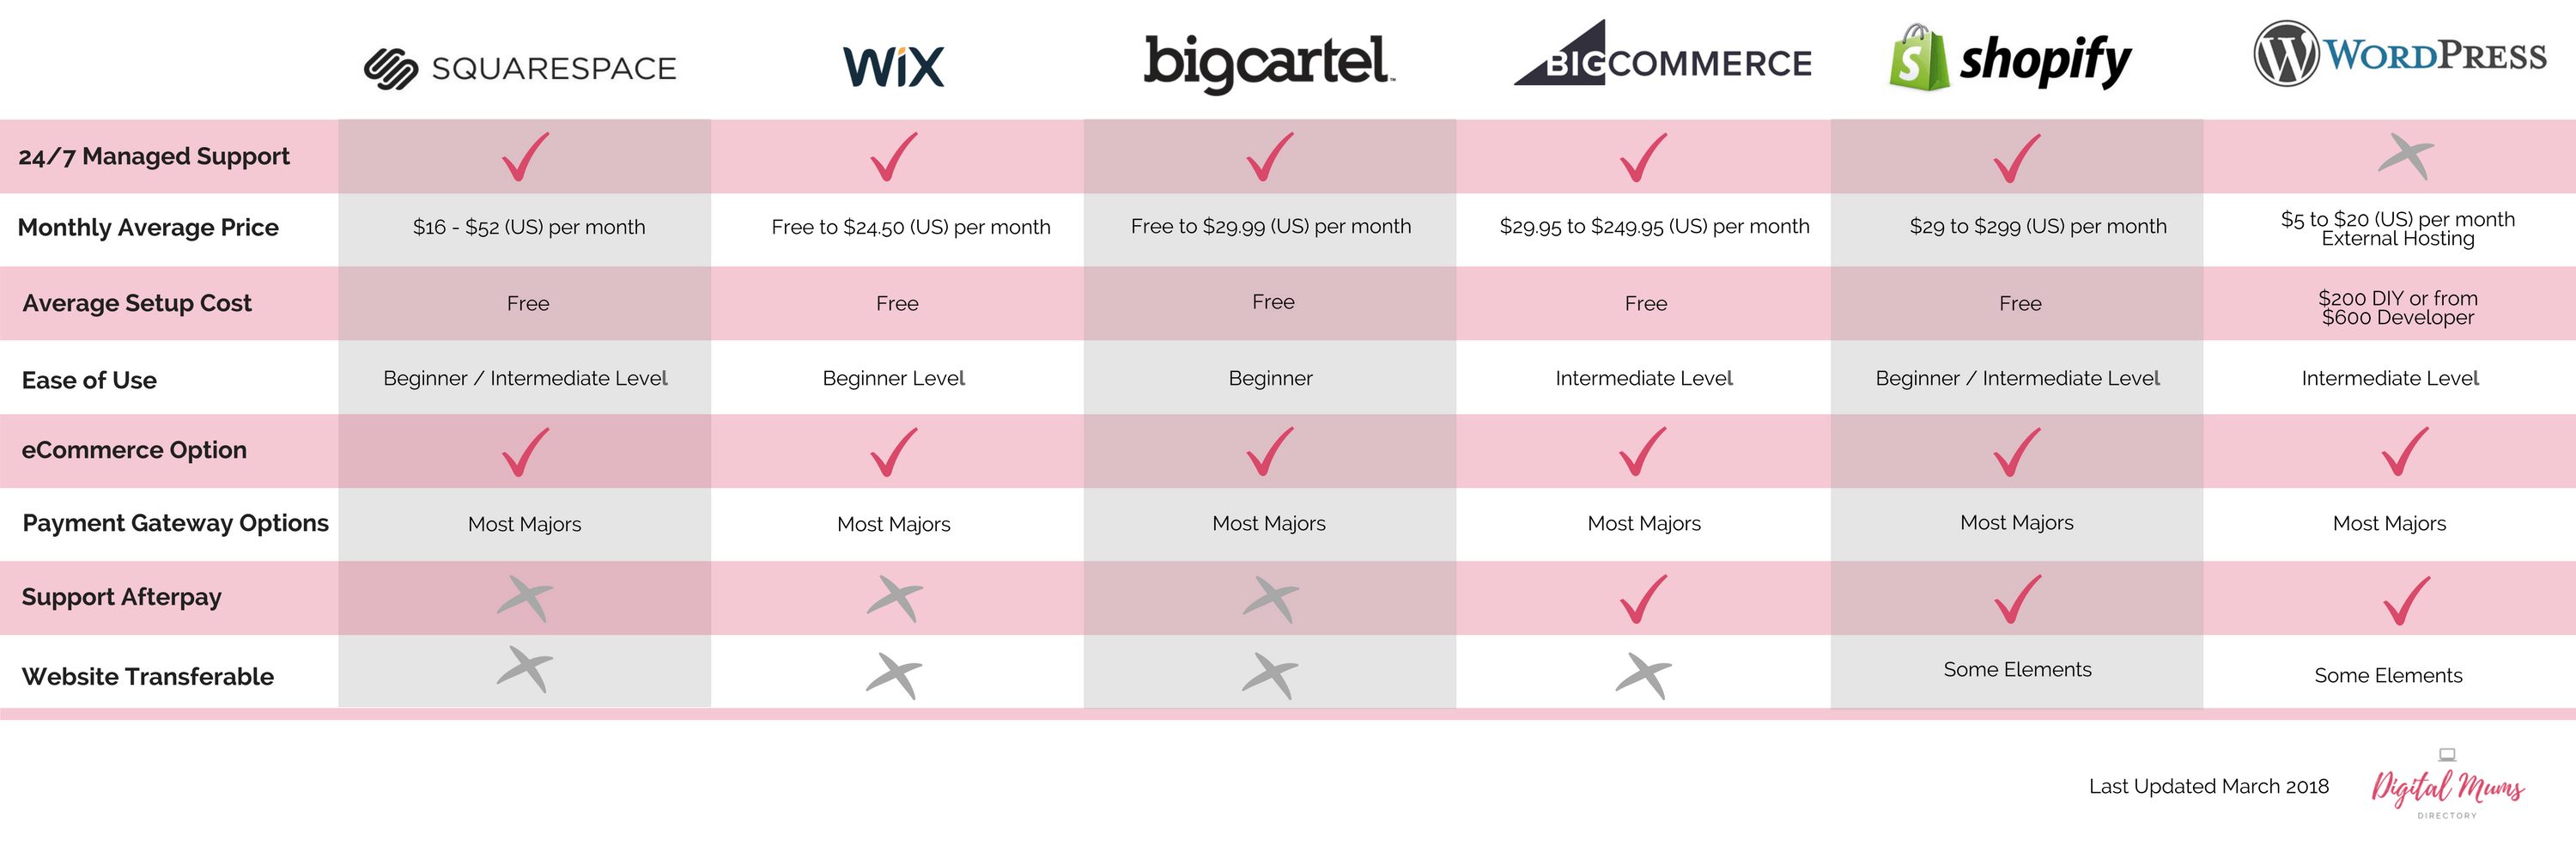 Wordpress, Shopify, Big Cartel, BigCommerce, WIX, Squarespace Compared